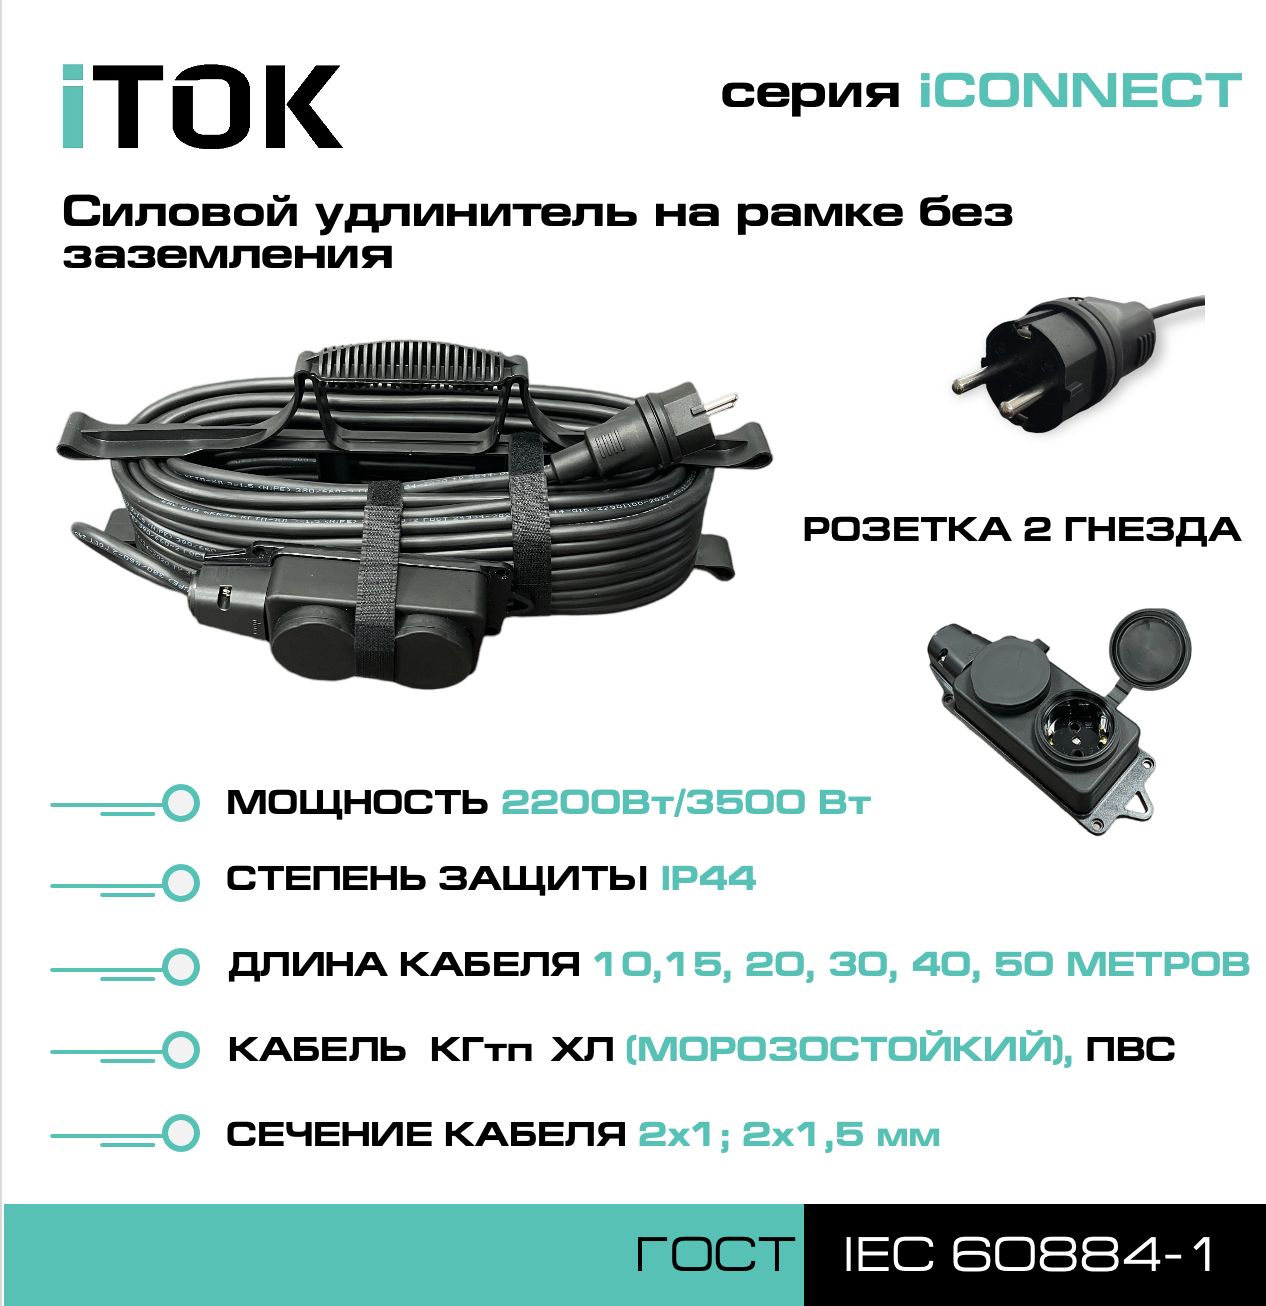 Удлинитель на рамке без земли серии iTOK iCONNECT КГтп-ХЛ 2х1,5 мм 2 гнезда IP44 50 м